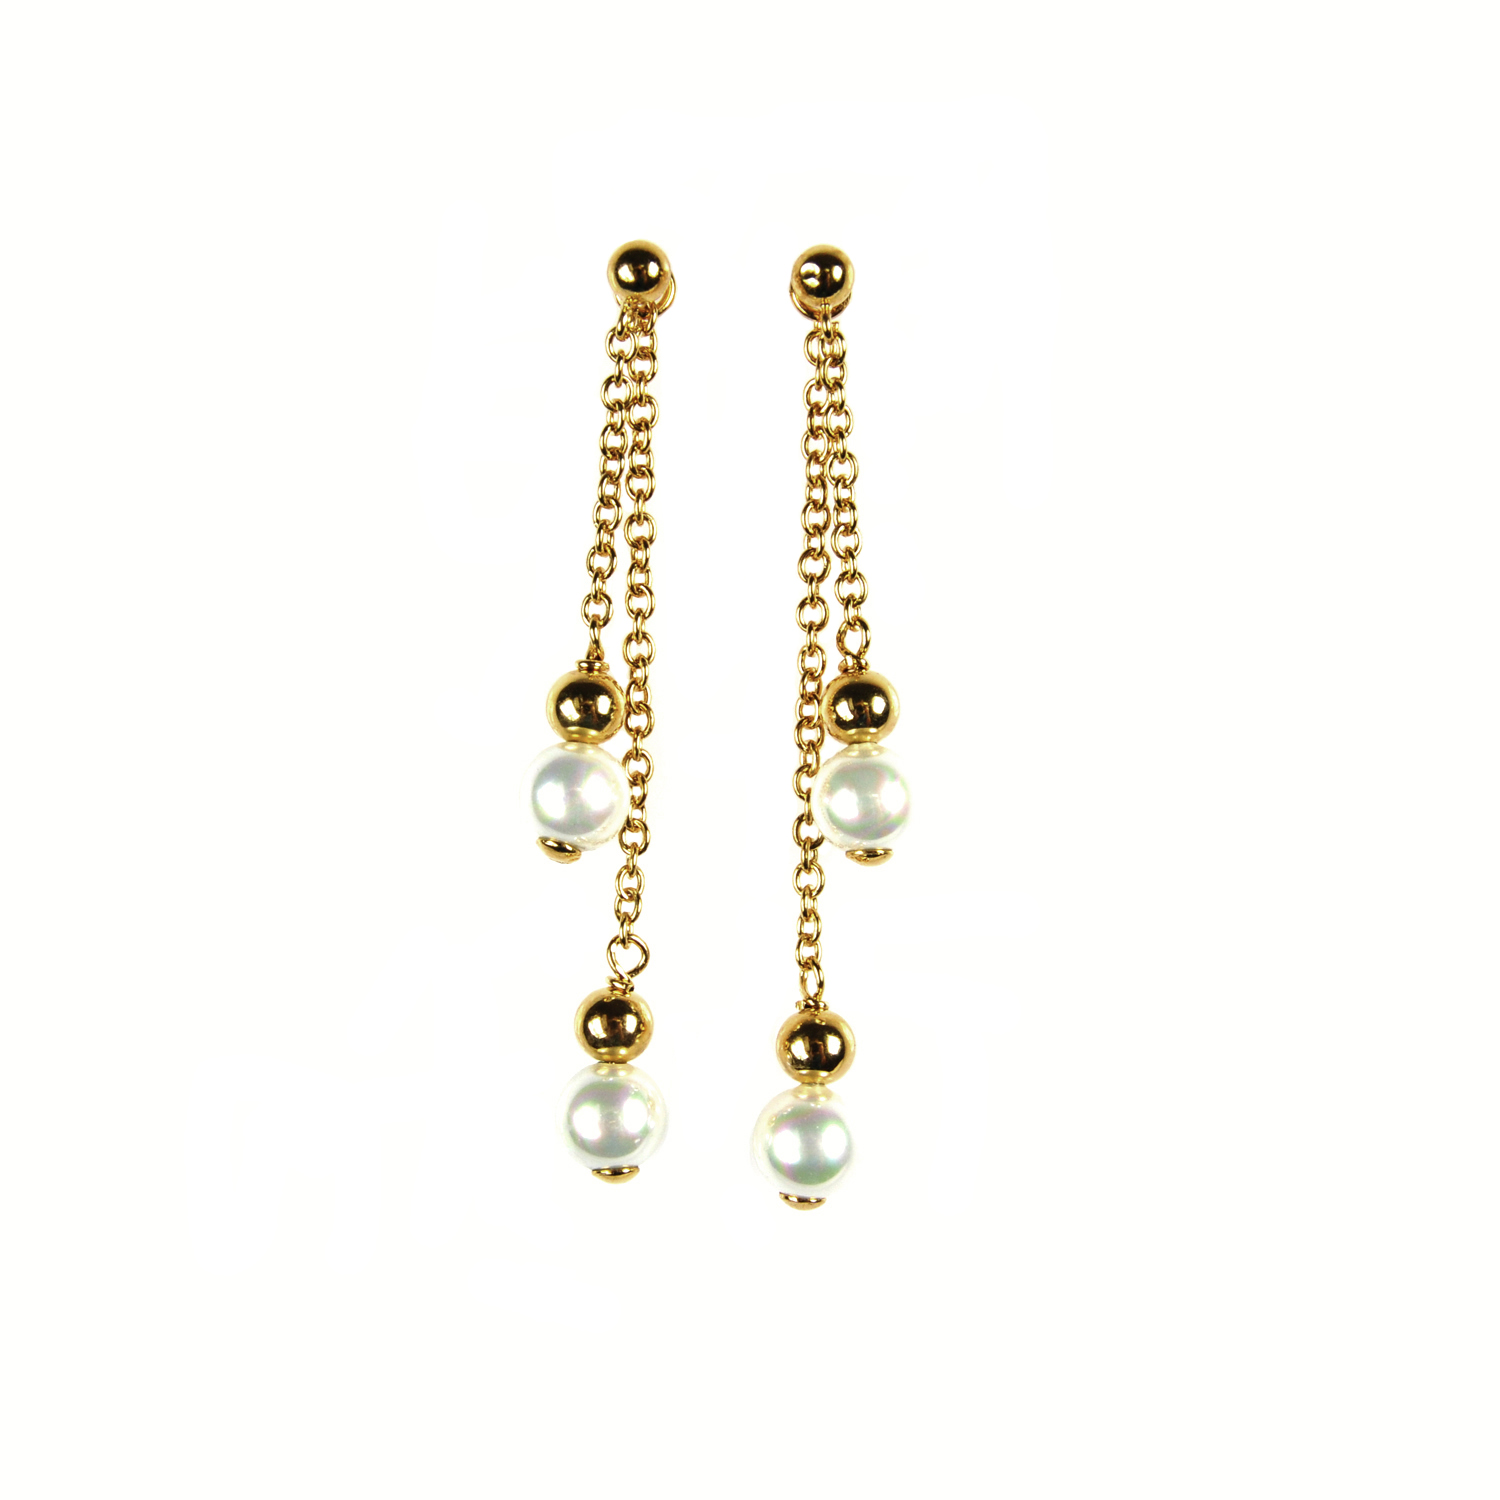 Goldplated earrings - 2 in 1